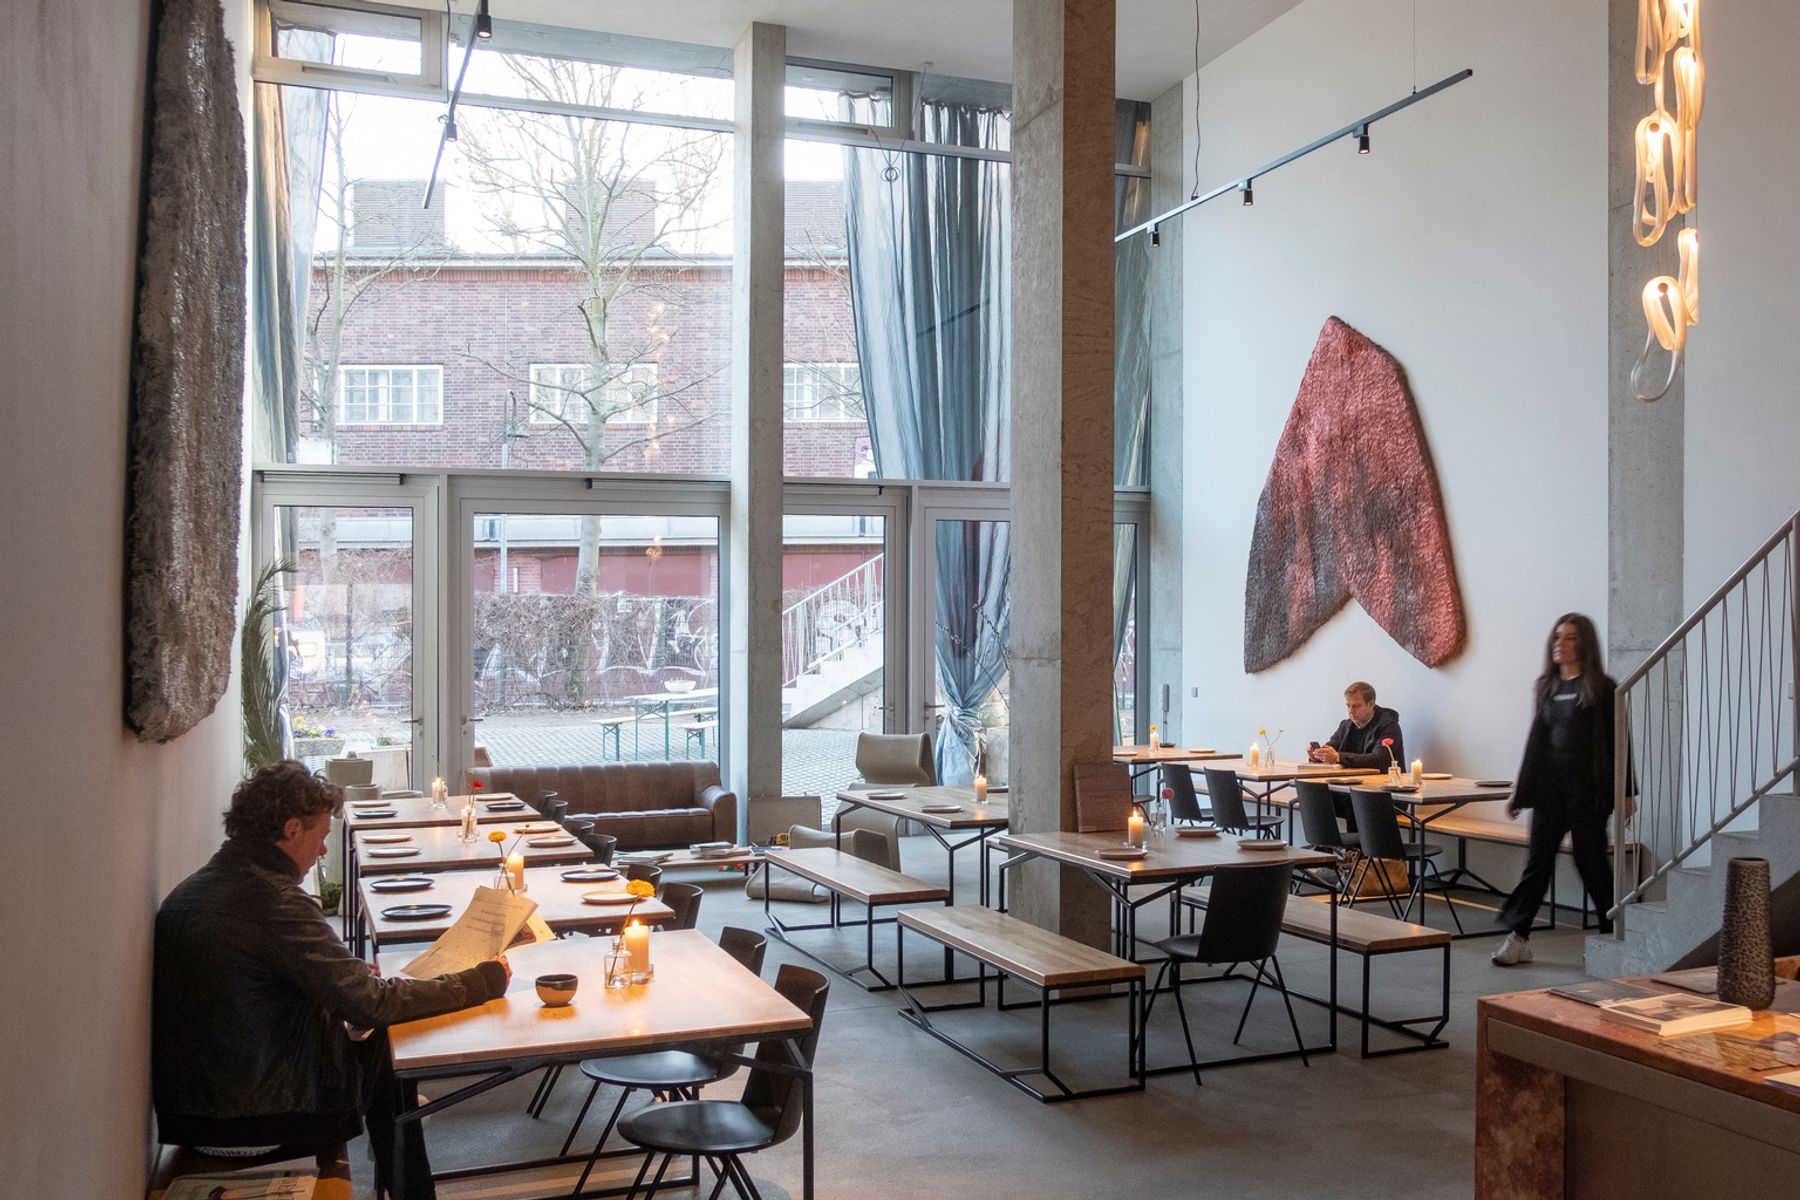 Baldon Cafe & Bar, Berlino. Architettura: Brandlhuber, Berlino. Progettazione illuminotecnica: Patrick McCumiskey. Fotografia: Sebastian Mayer, Berlino.